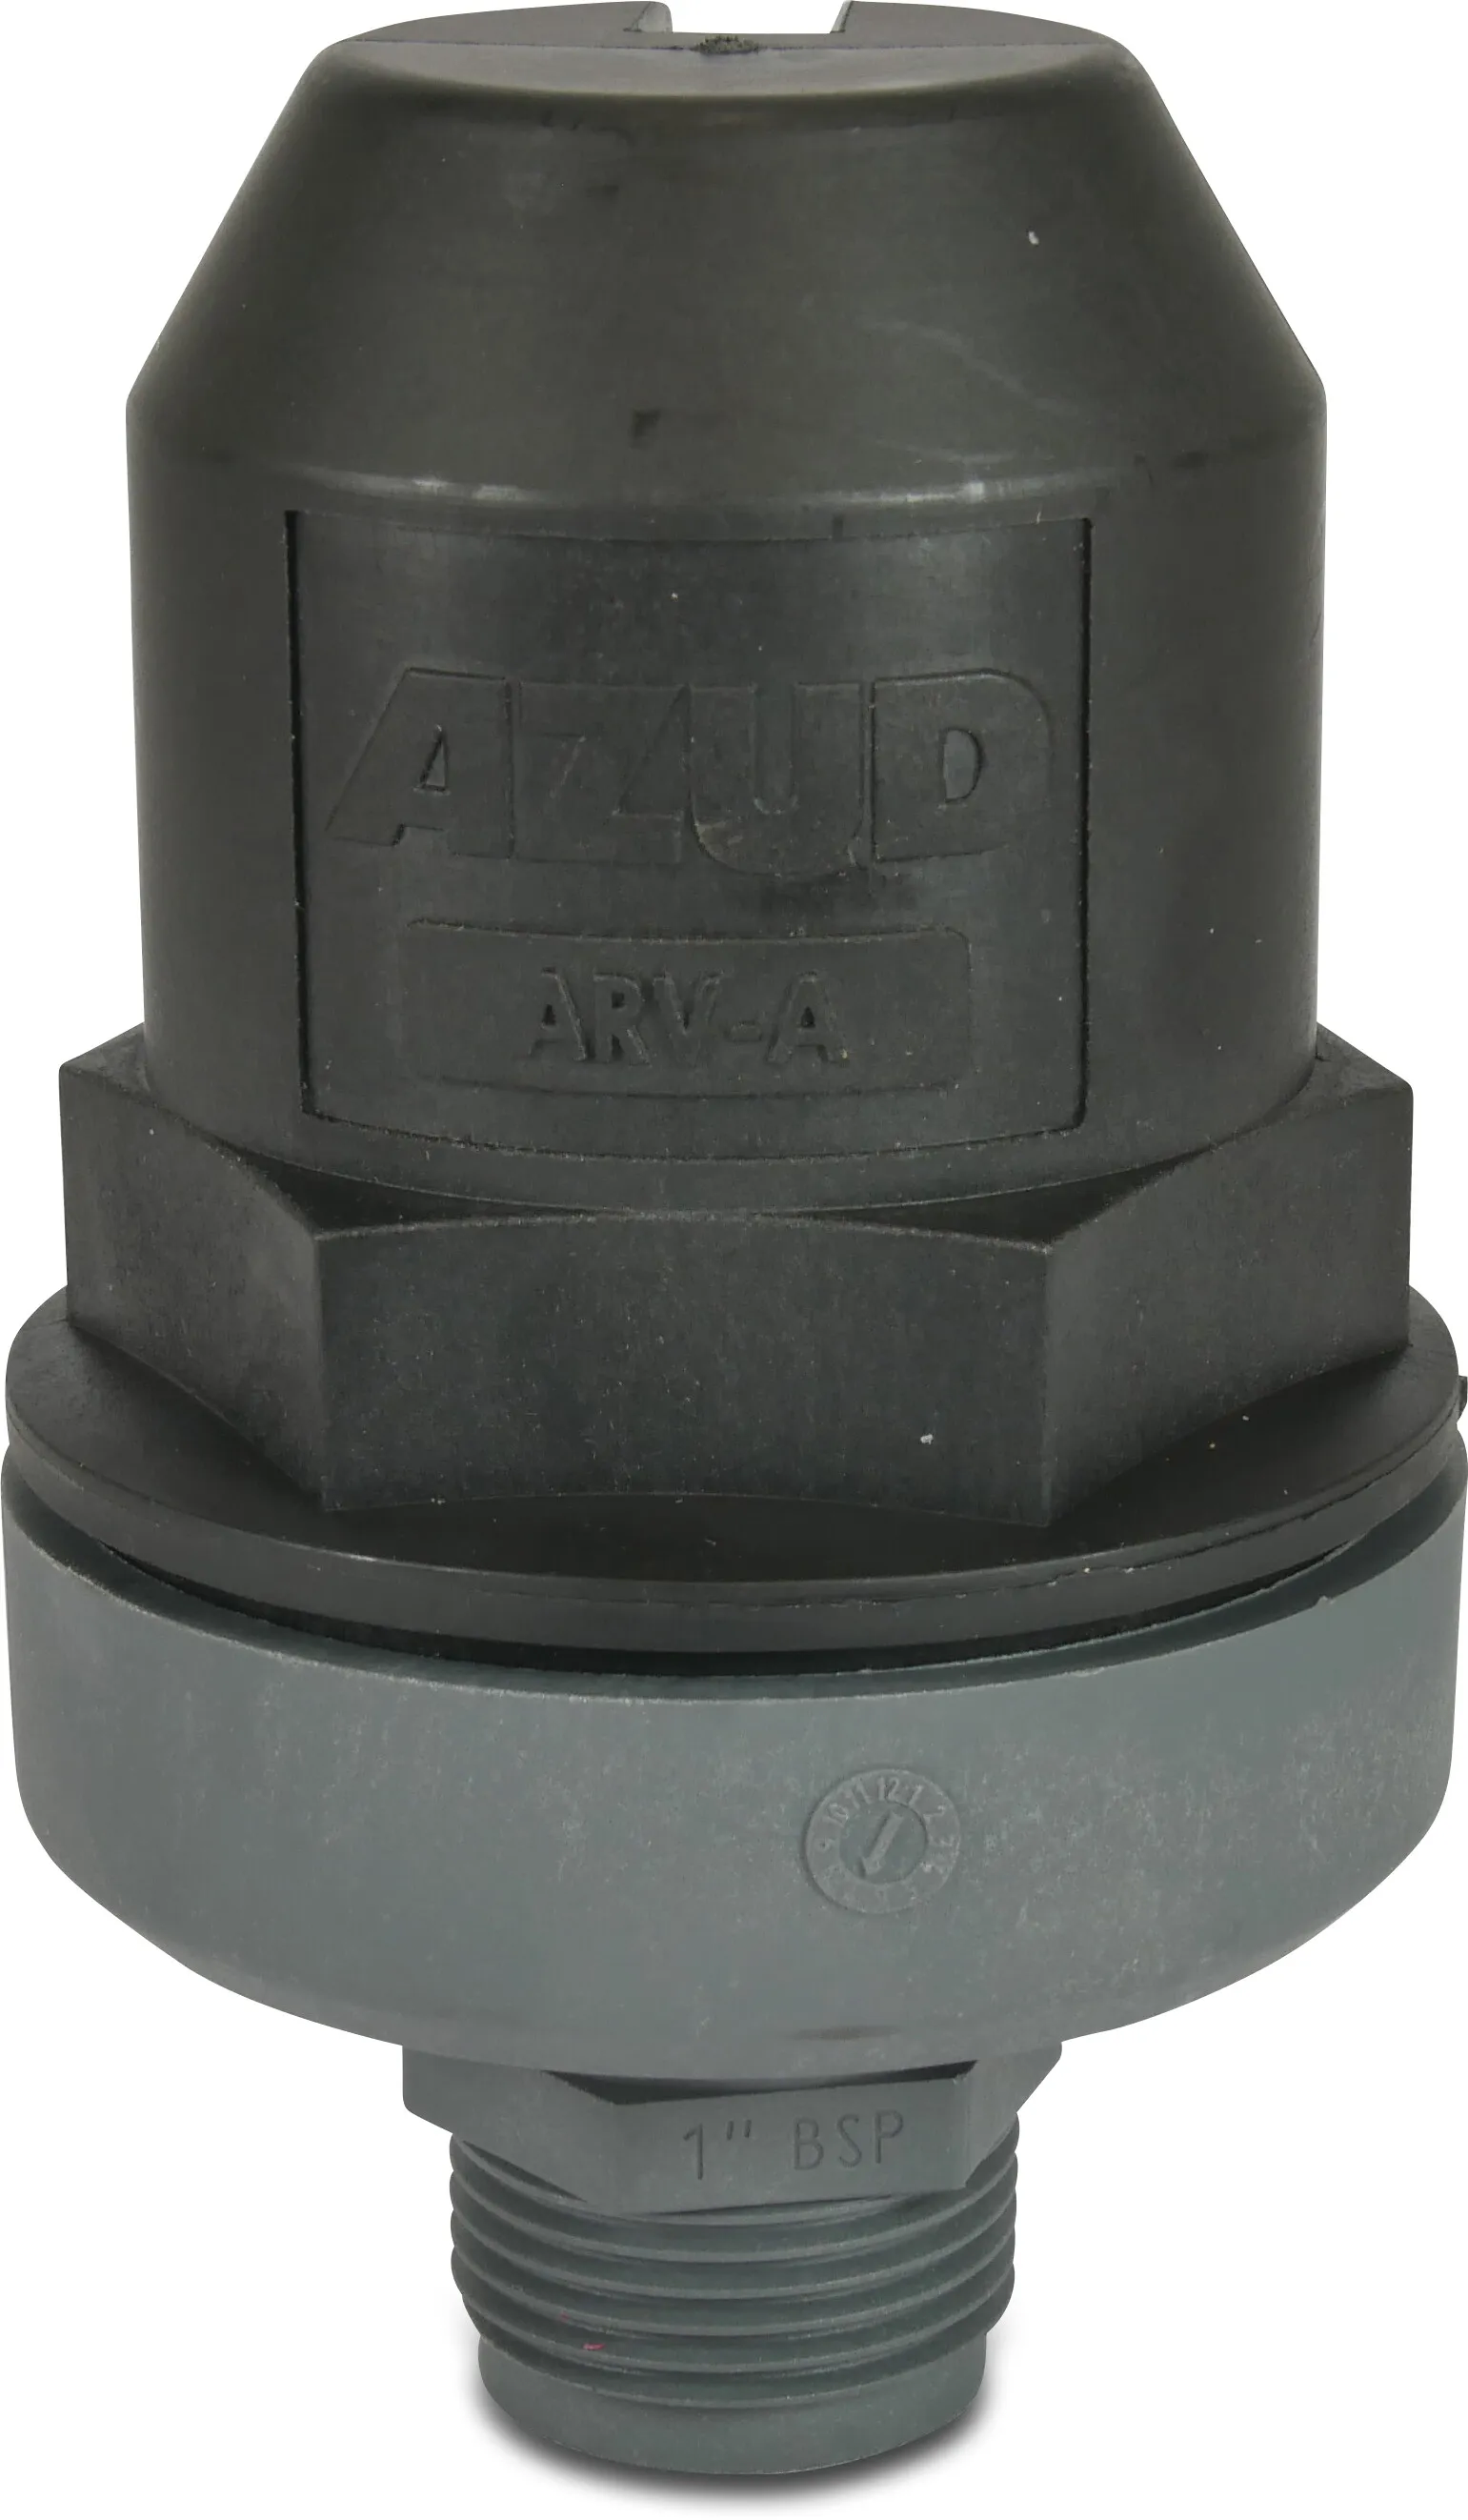 Azud Air release valve PP 1" male thread black type Triple effect